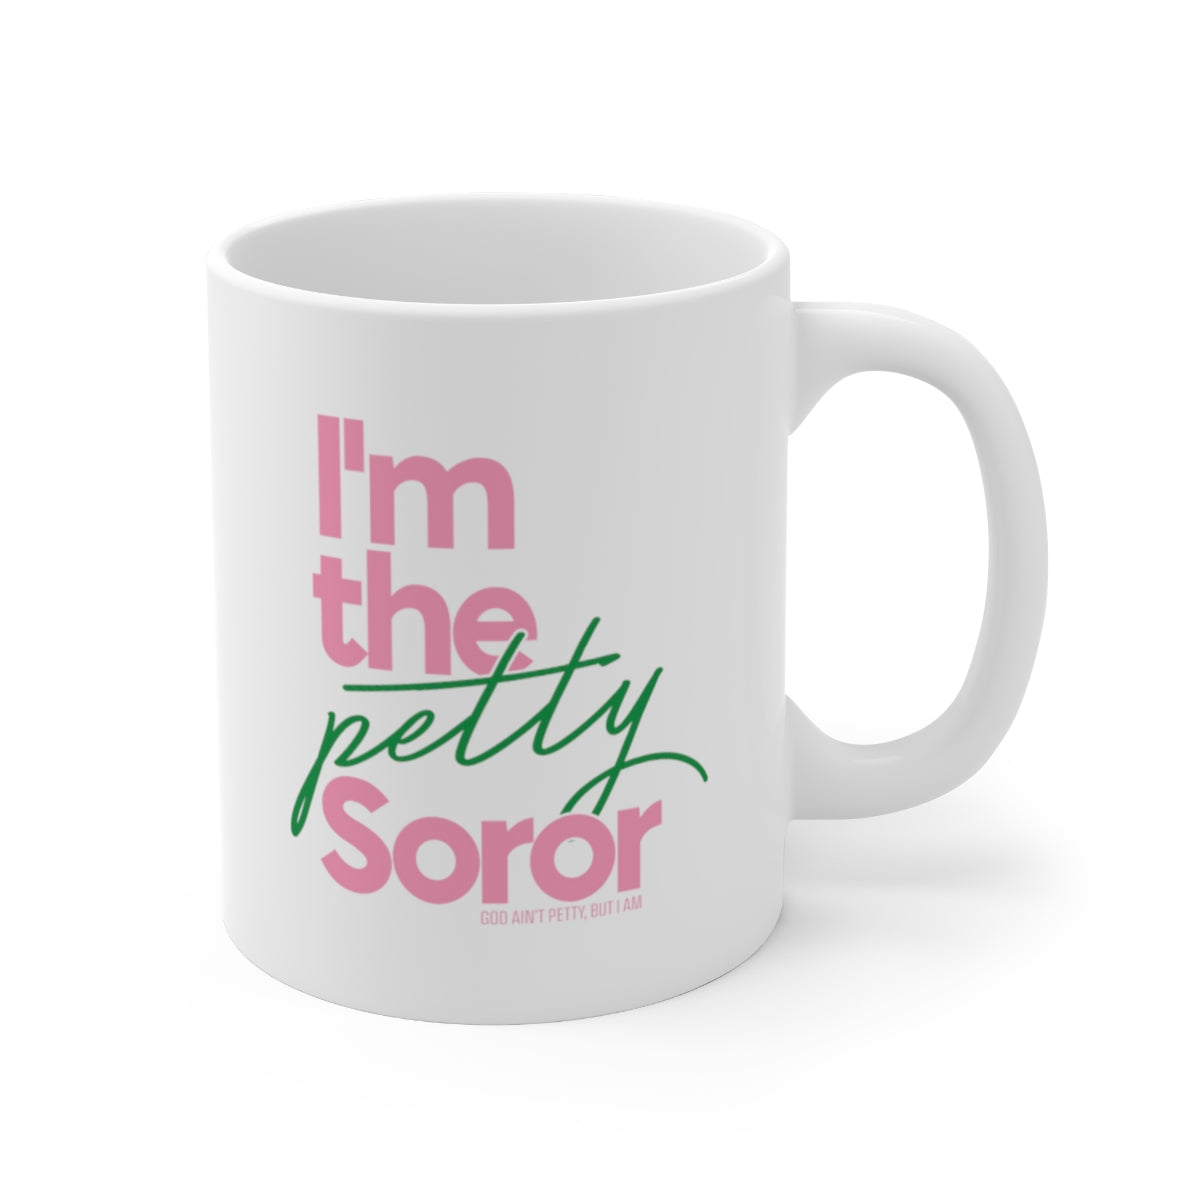 I'm the Petty Soror Mug 11oz (Pink/Green)-Mug-The Original God Ain't Petty But I Am